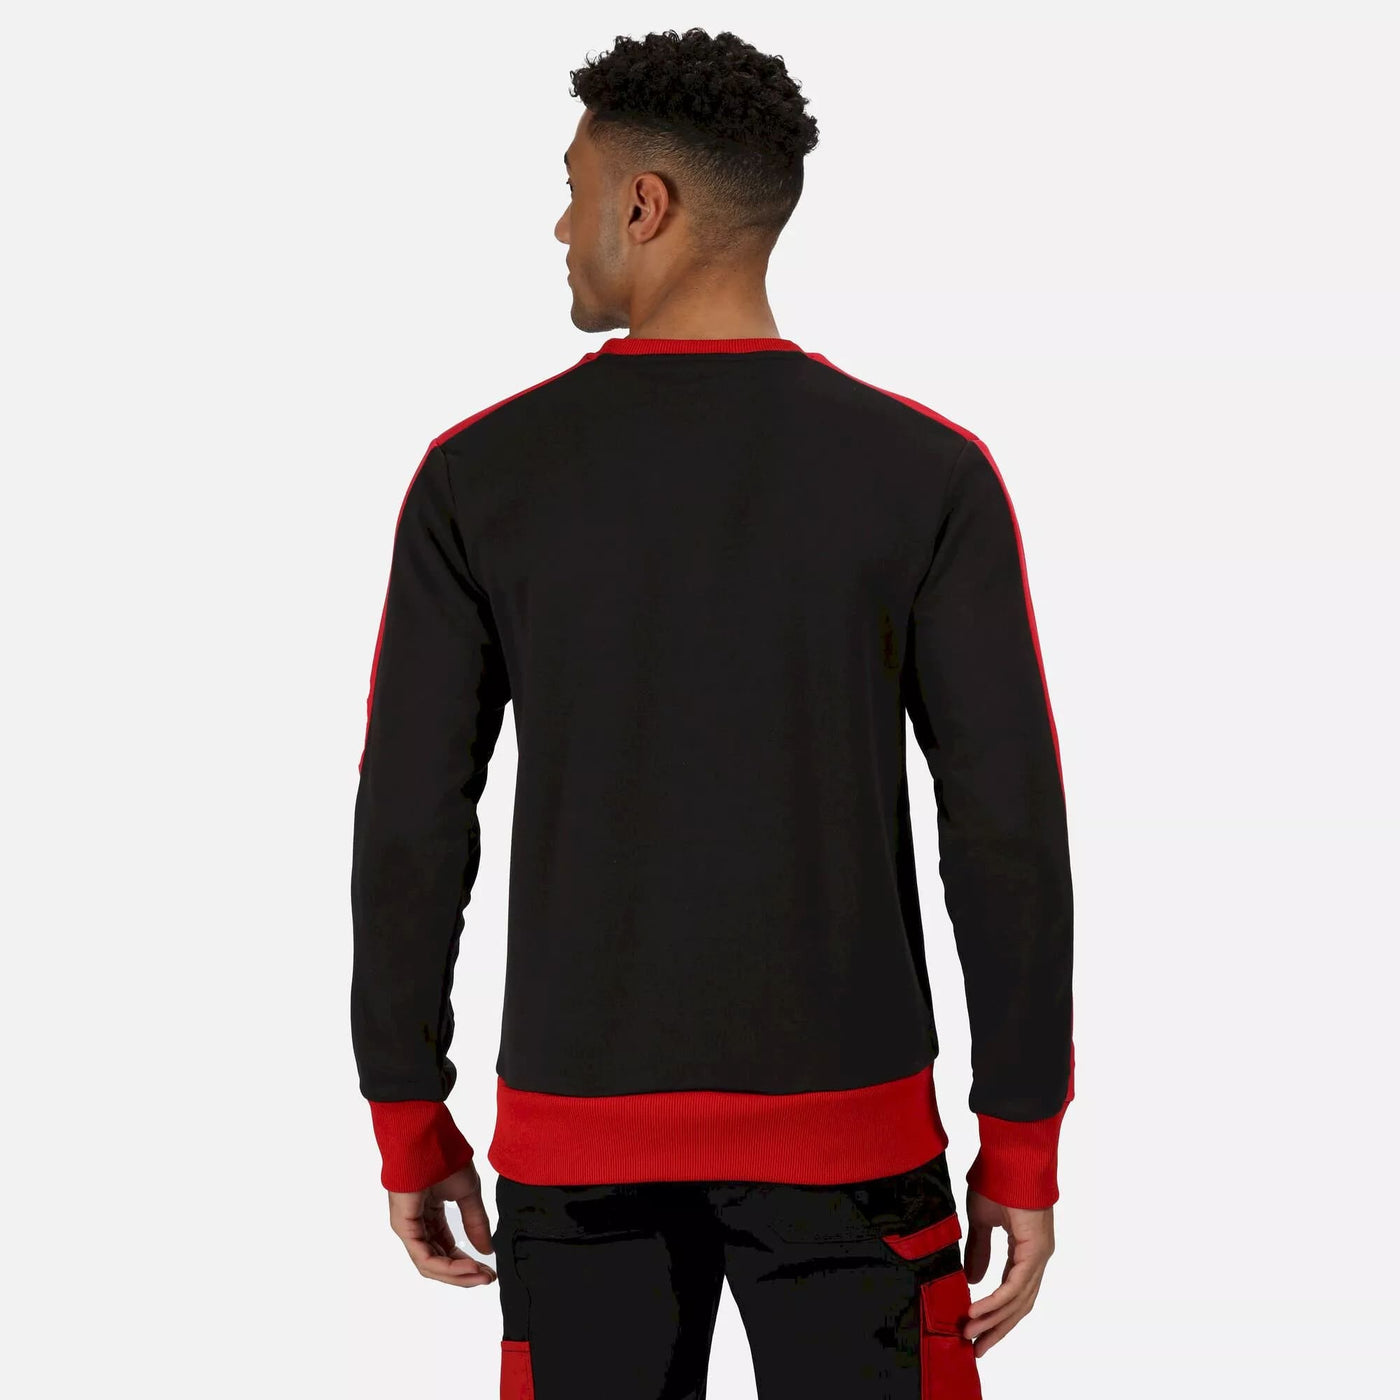 Regatta Contrast Crew Sweatshirt, Black/Classic Red